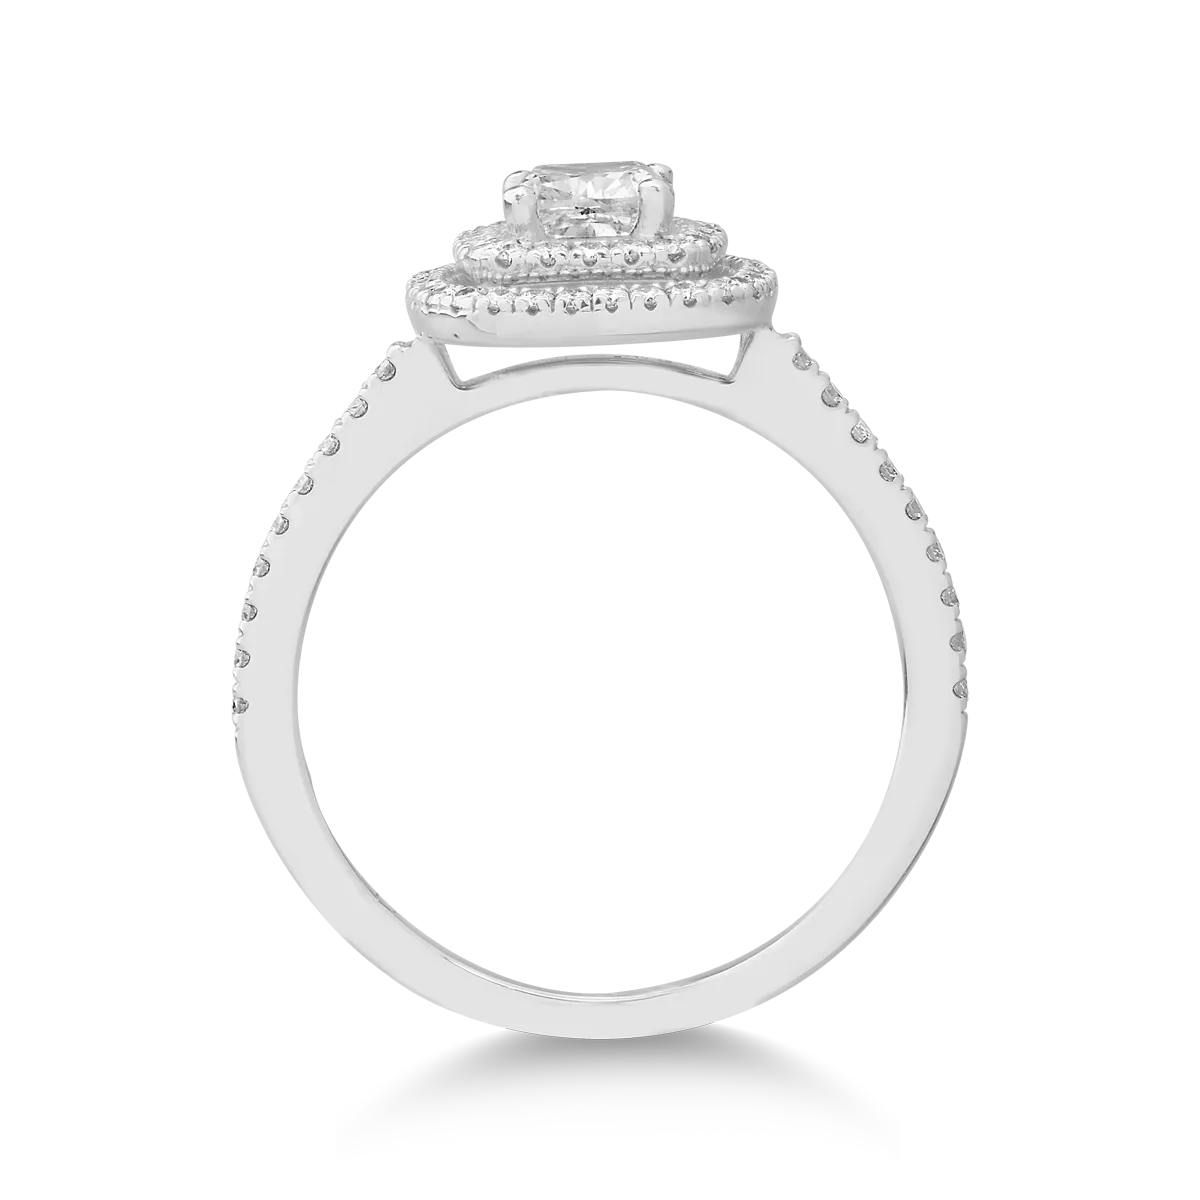 Inel de logodna din aur alb de 18K cu diamant de 0.9ct si diamante de 0.33ct